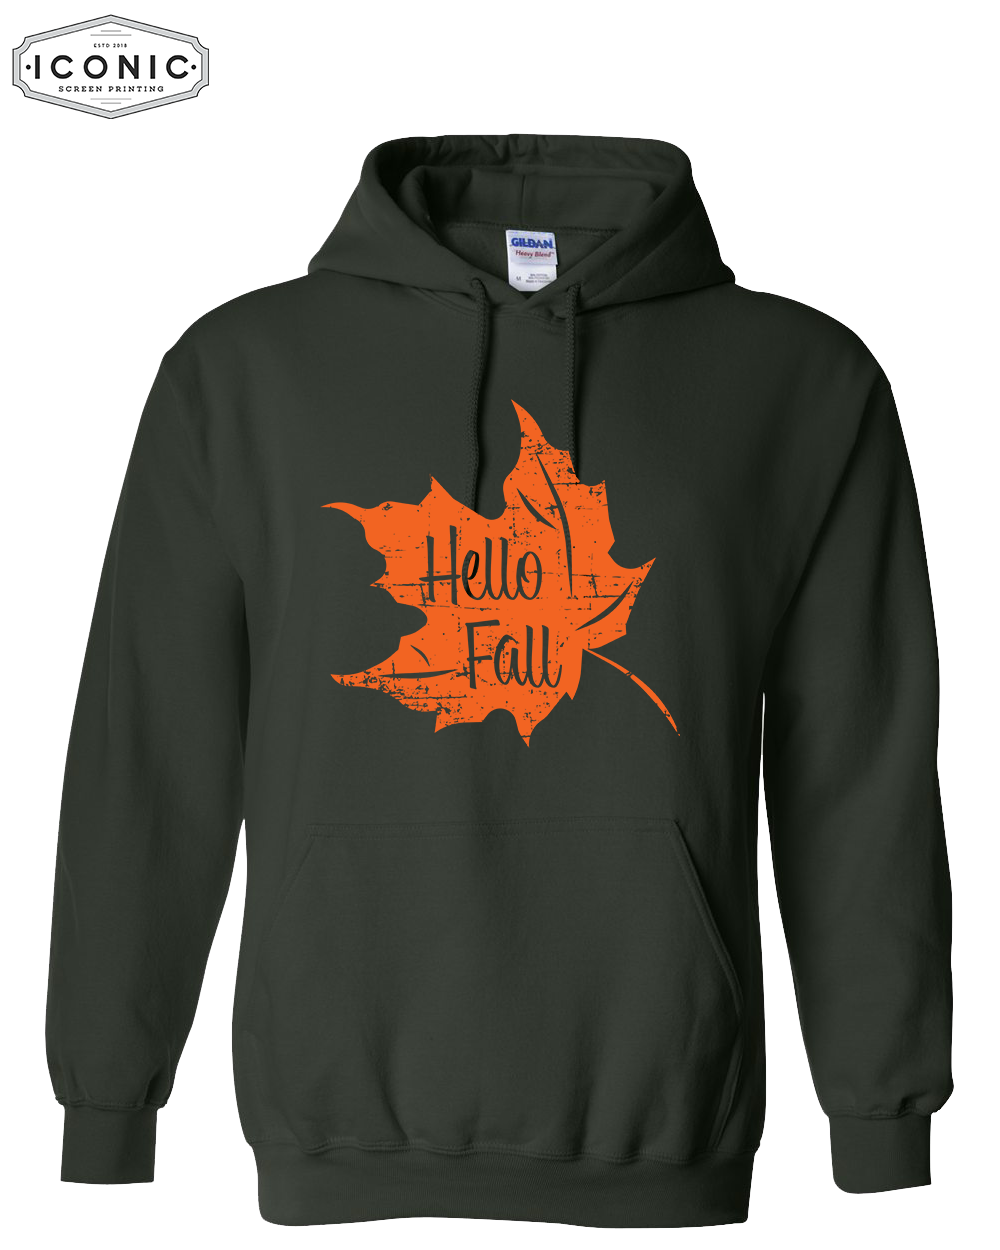 Hello Fall - Heavy Blend Hooded Sweatshirt